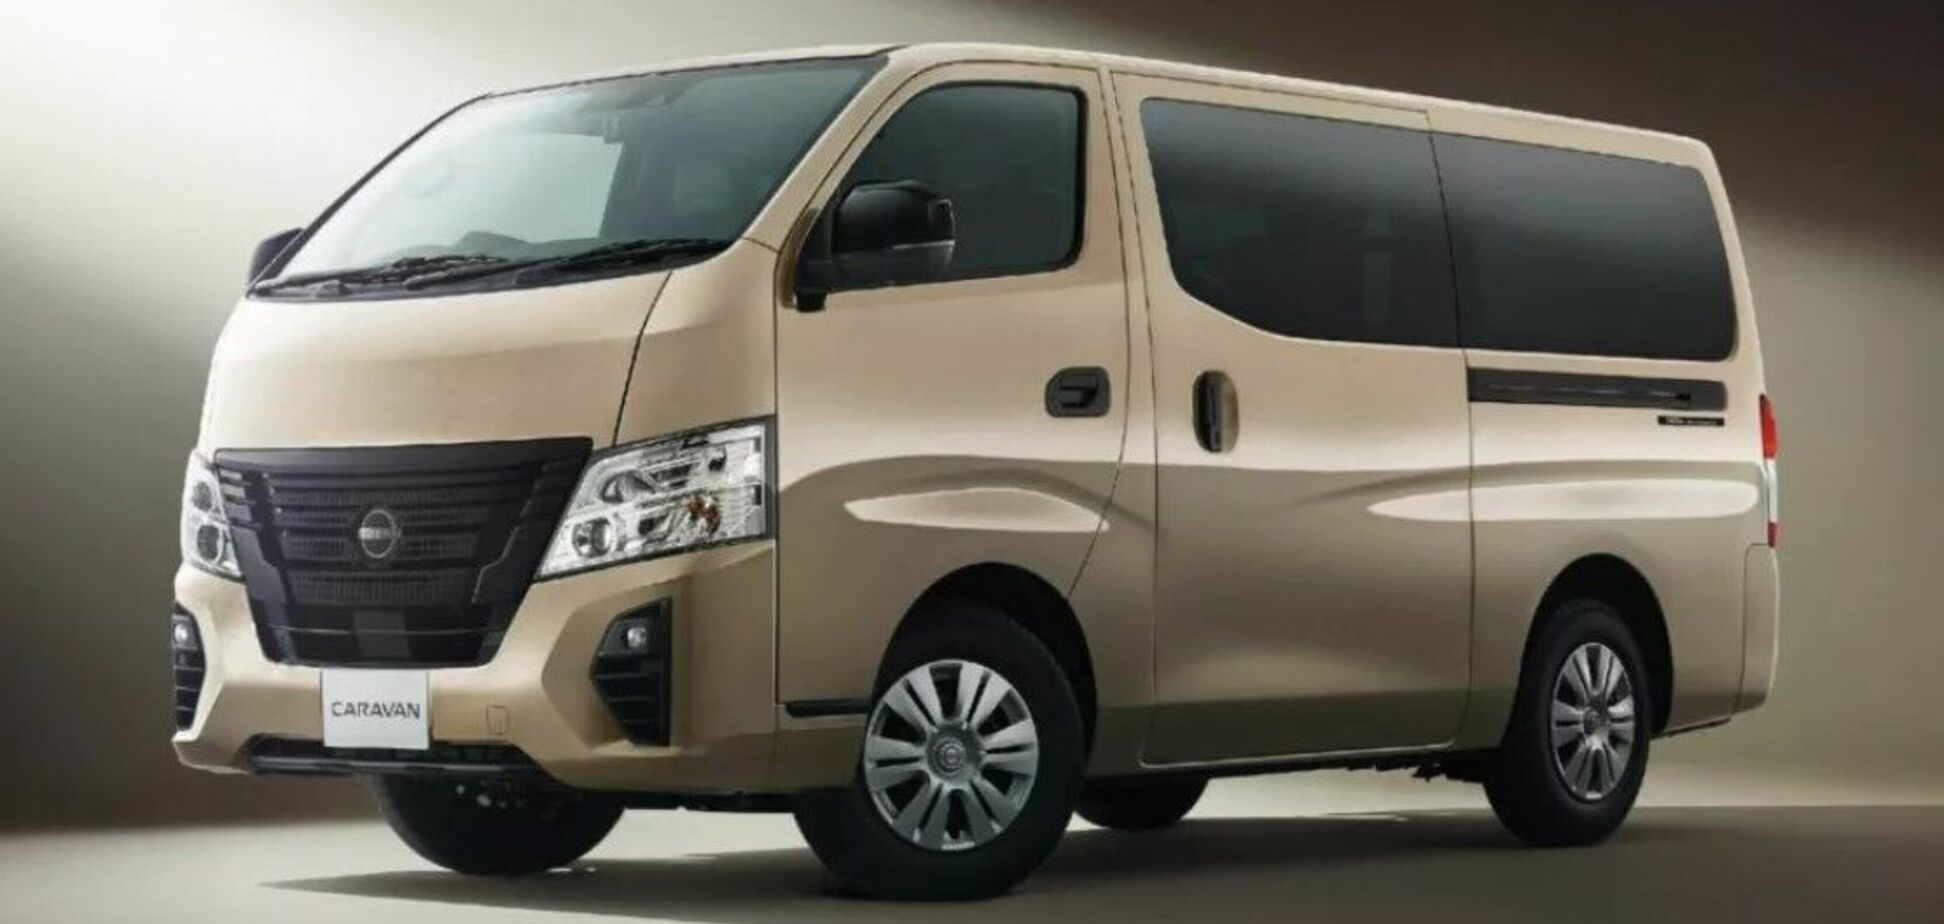  Nissan Caravan